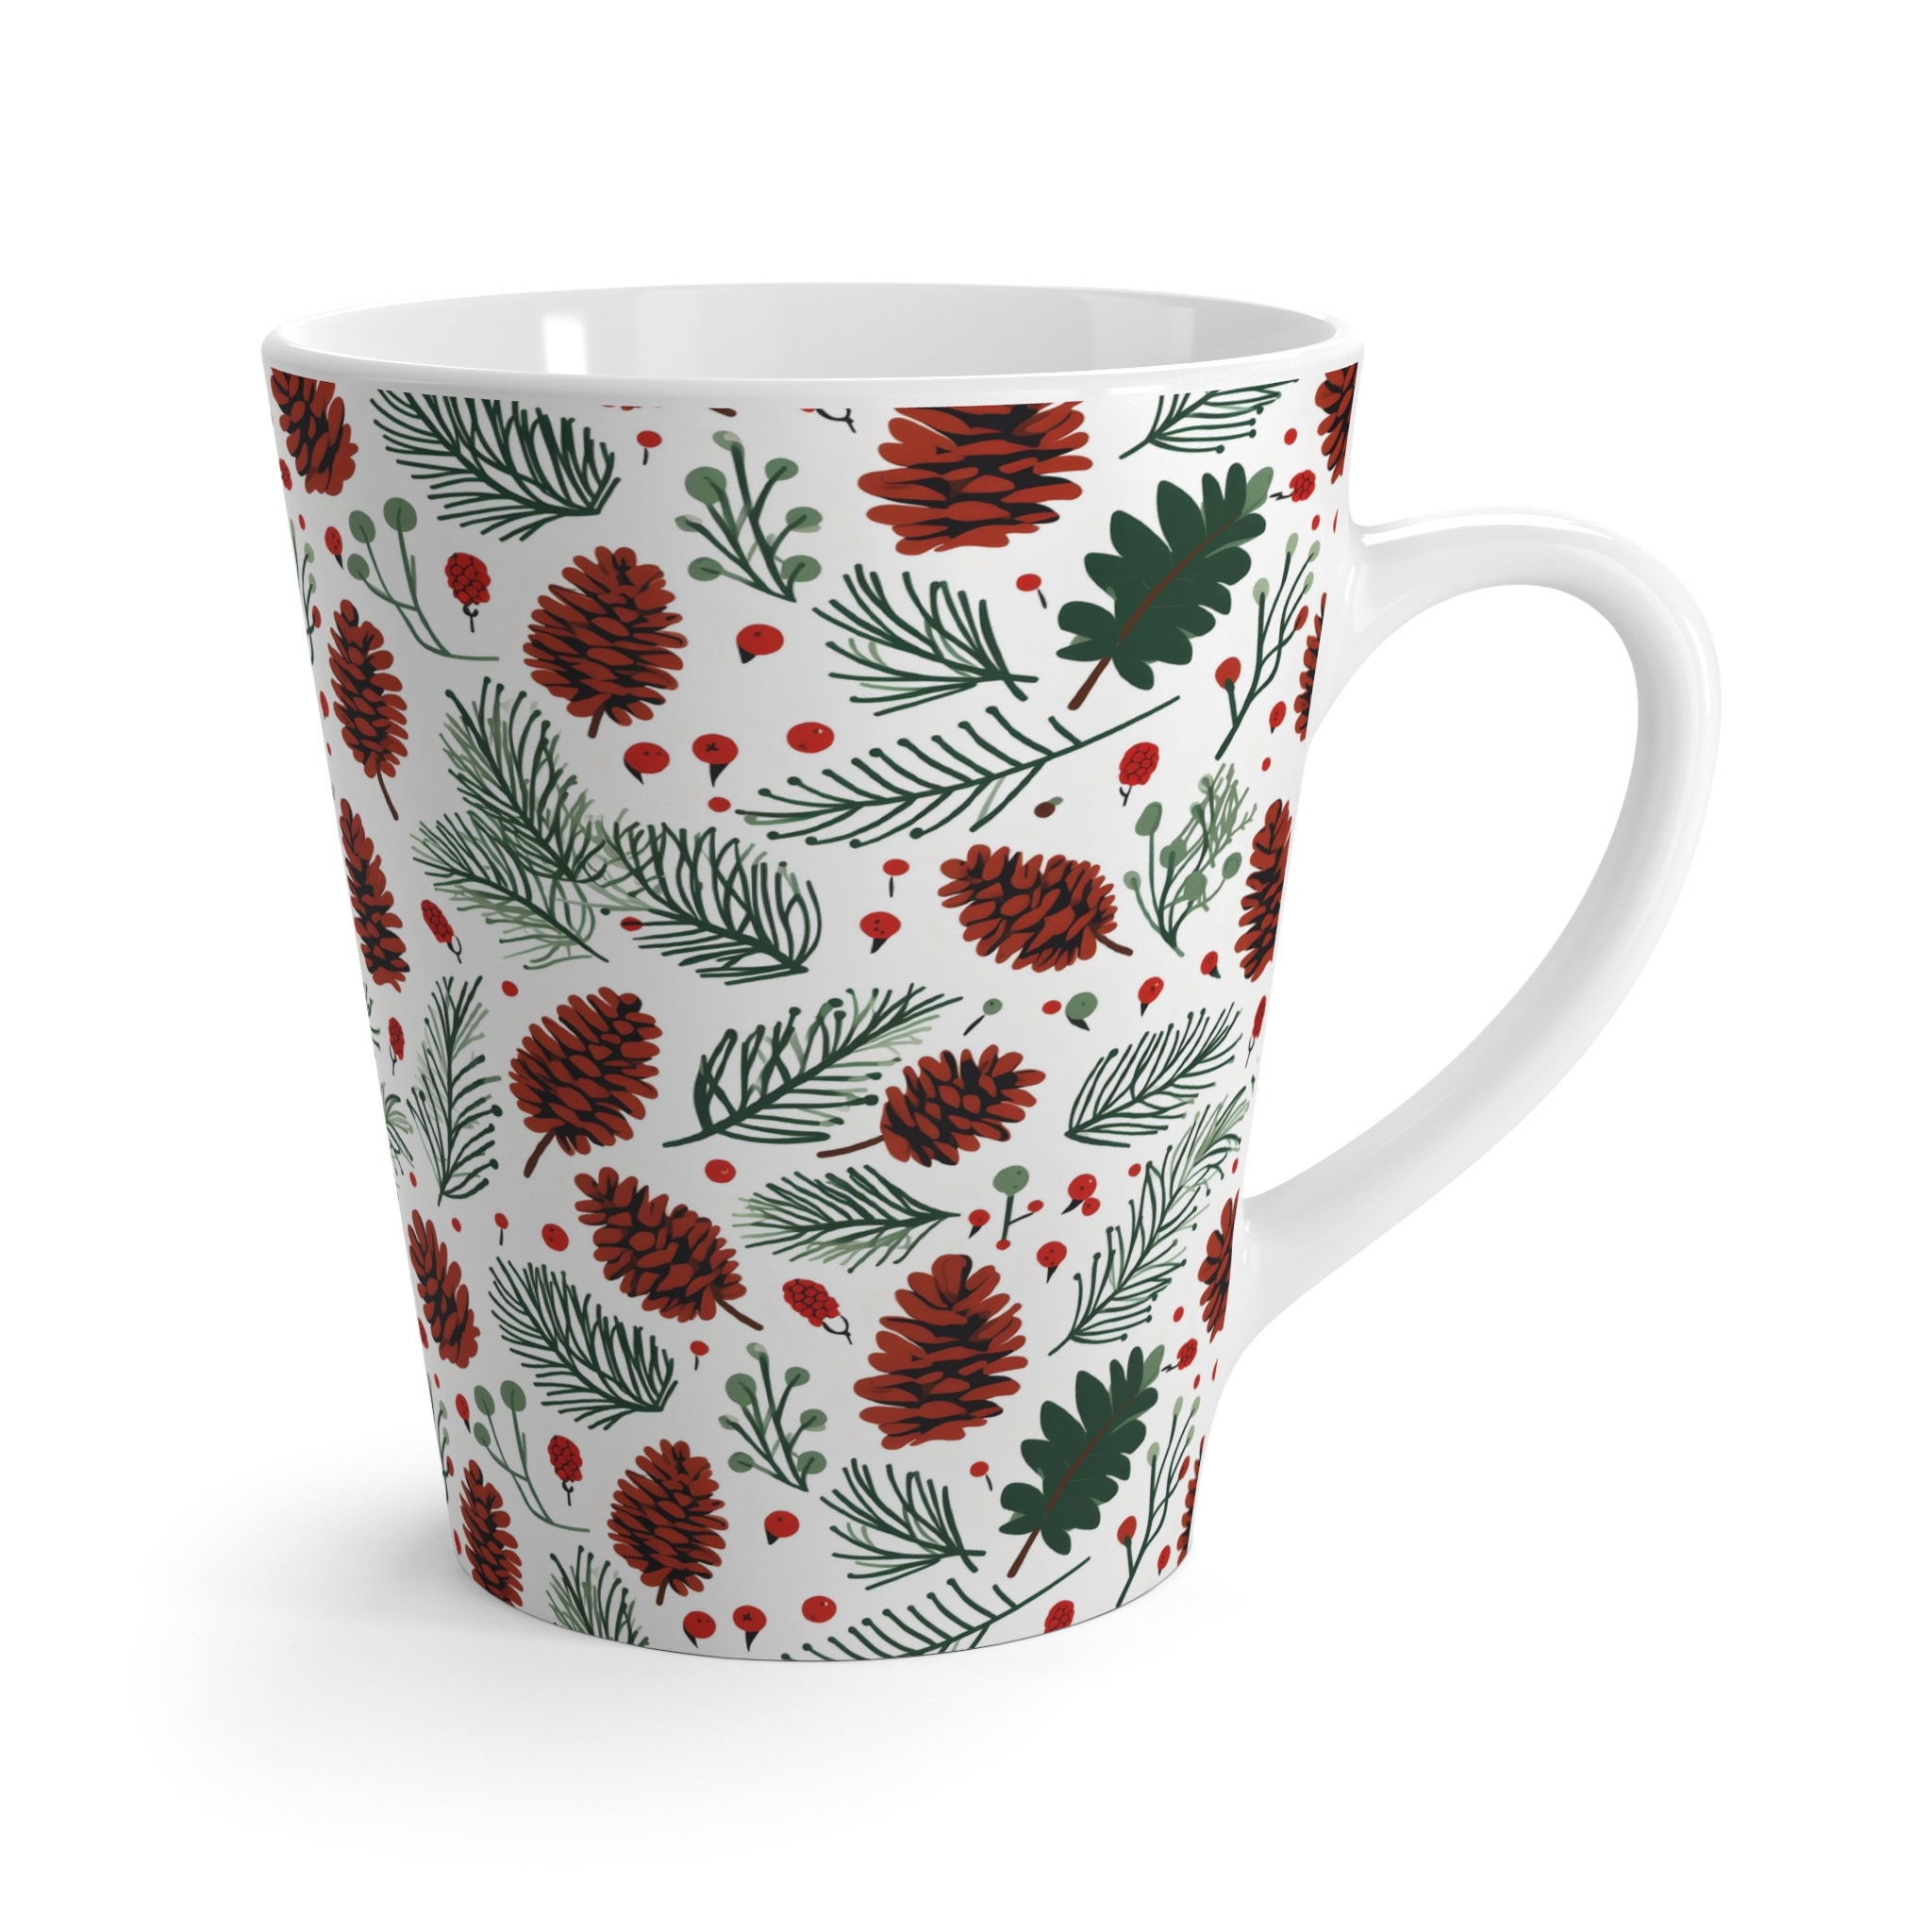 Coffee and Mug Gift Set – Pineland Coffee Company